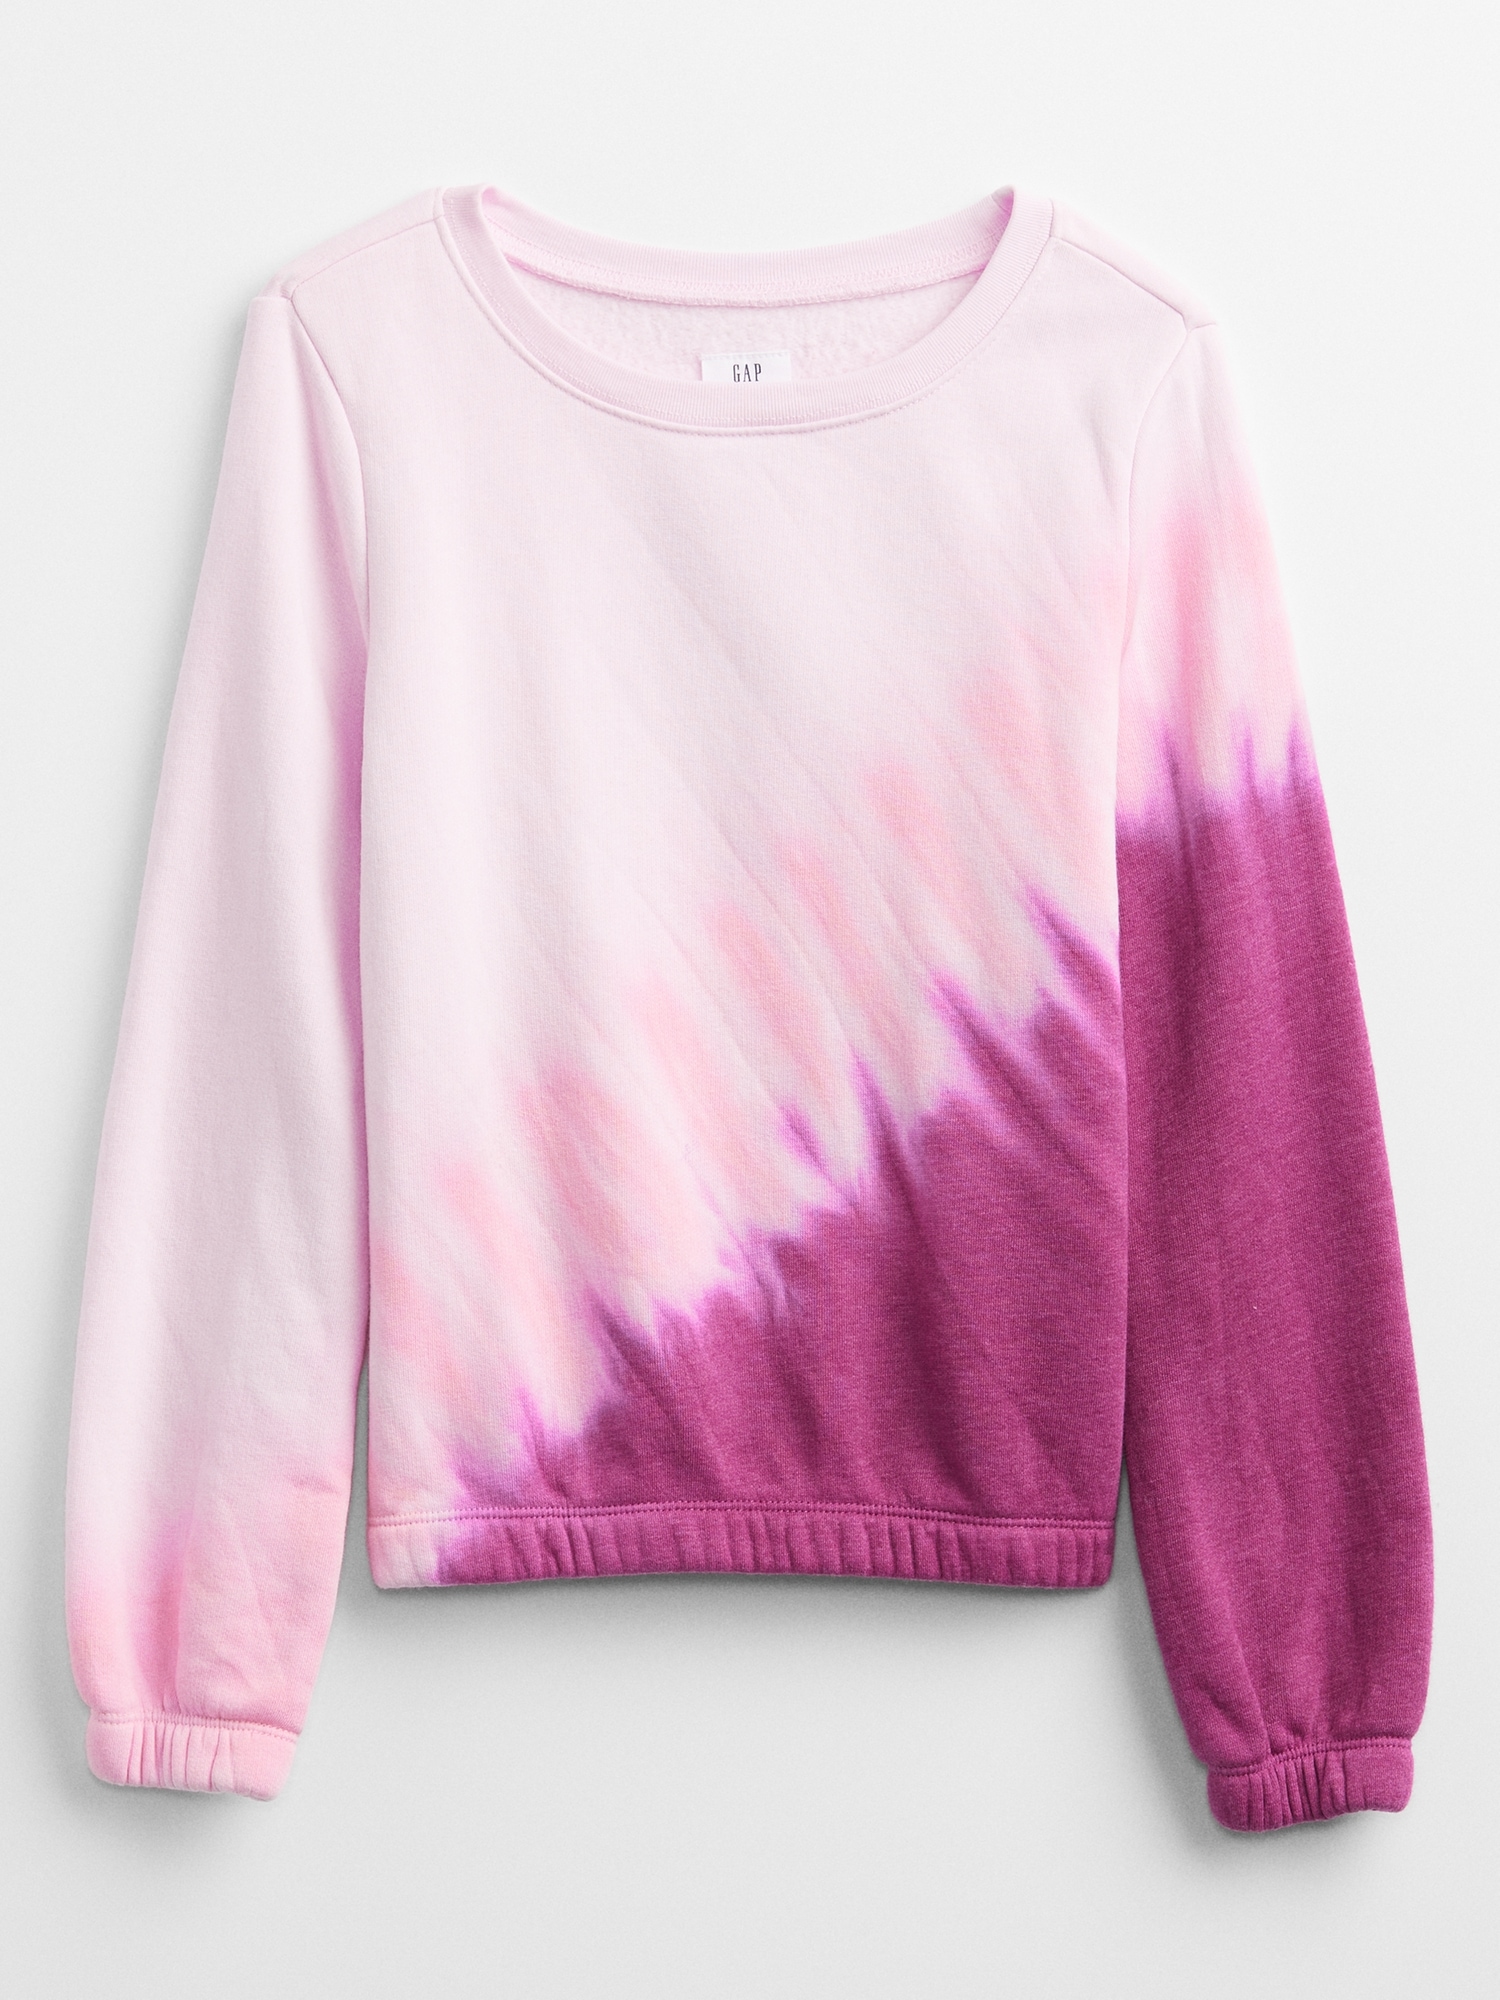 Kids Tie-Dye Sweatshirt | Gap Factory